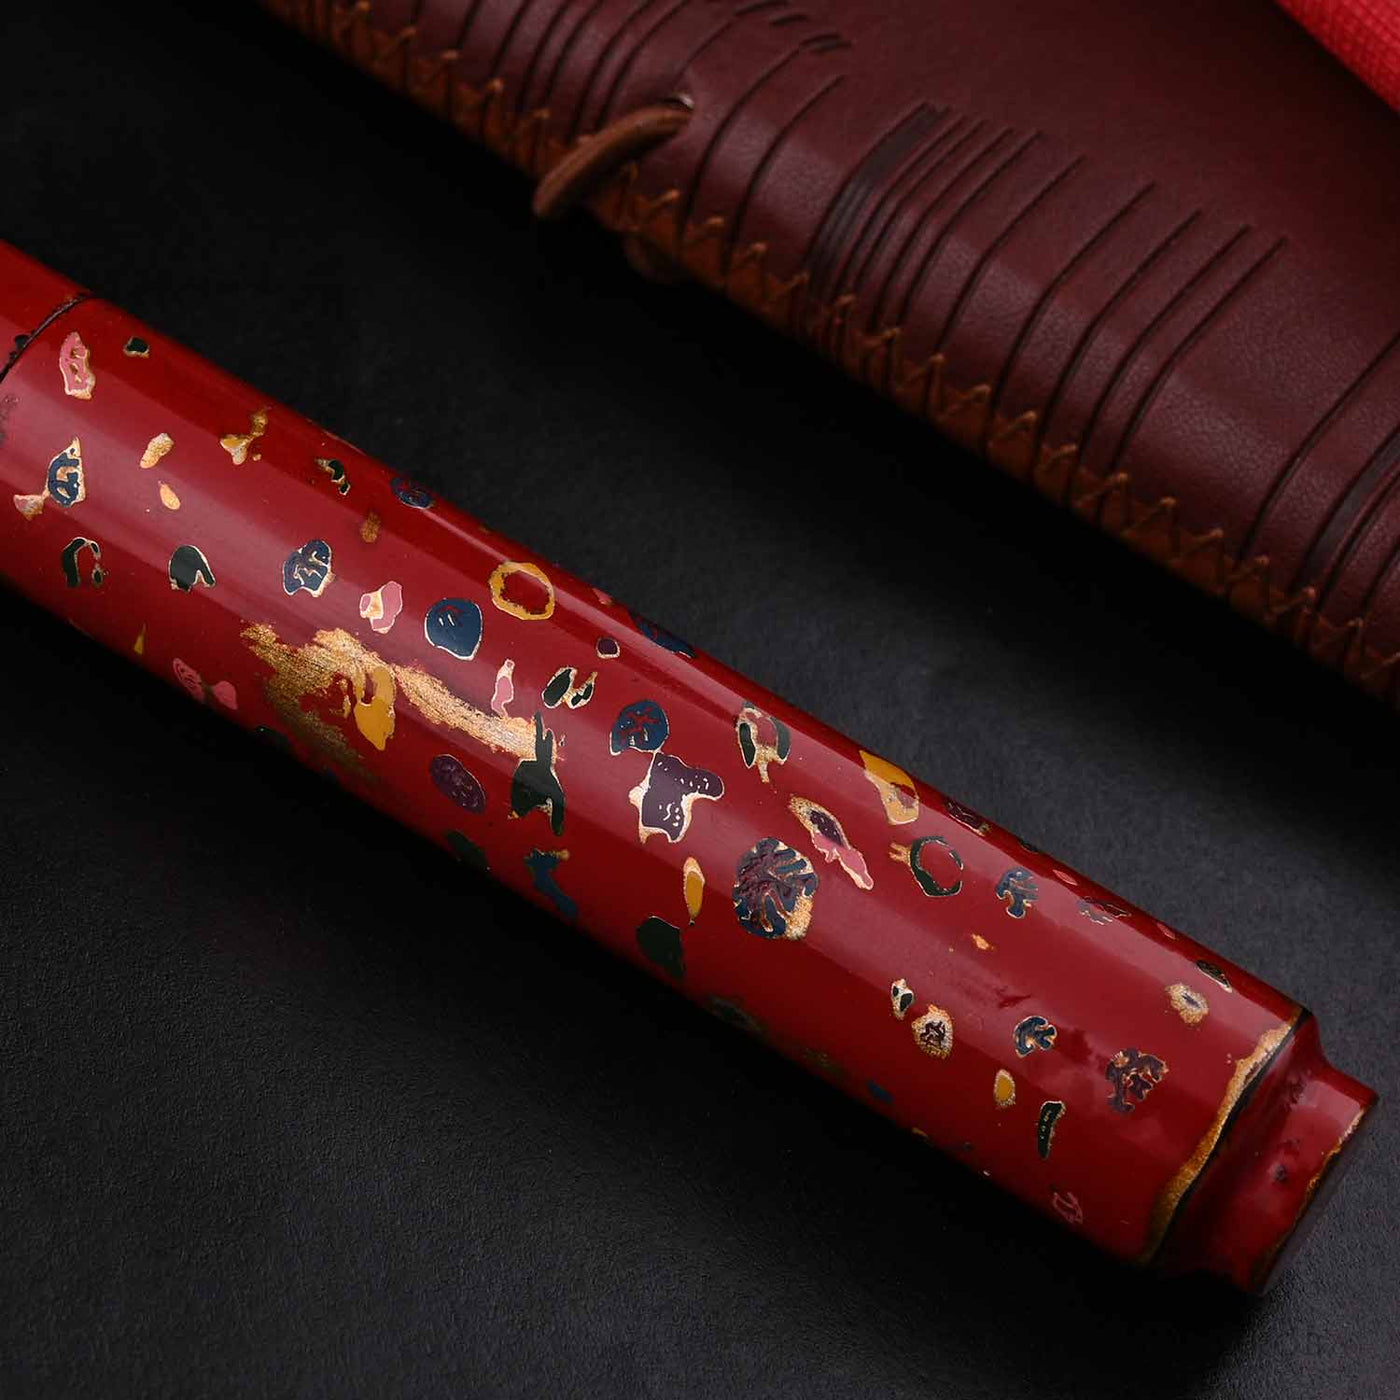 AP Magical Nuri Limited Edition Fountain Pen Red 18K Gold Nib 7